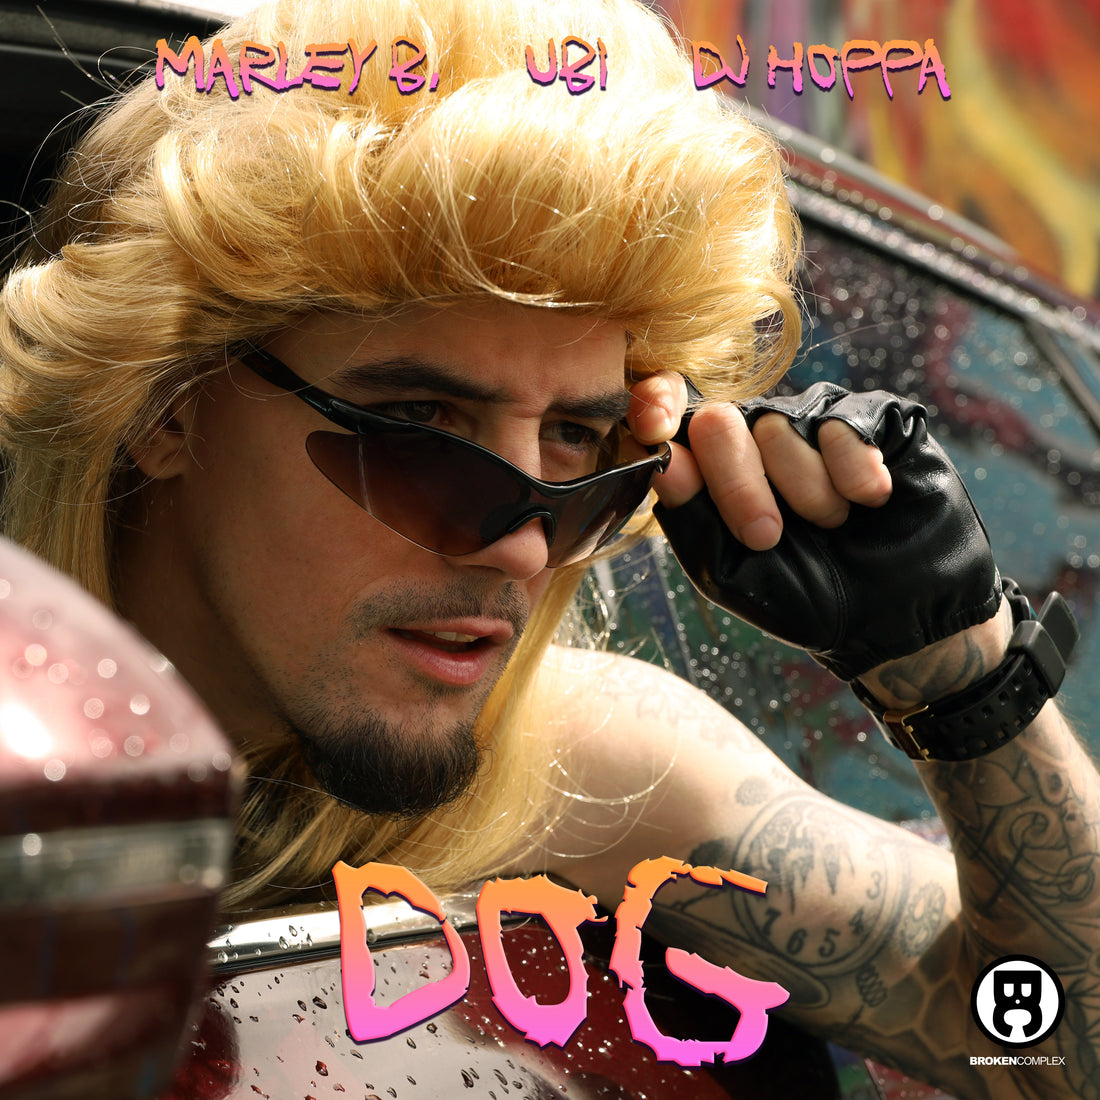 New Single: Marley B., Ubi & DJ Hoppa - Dog